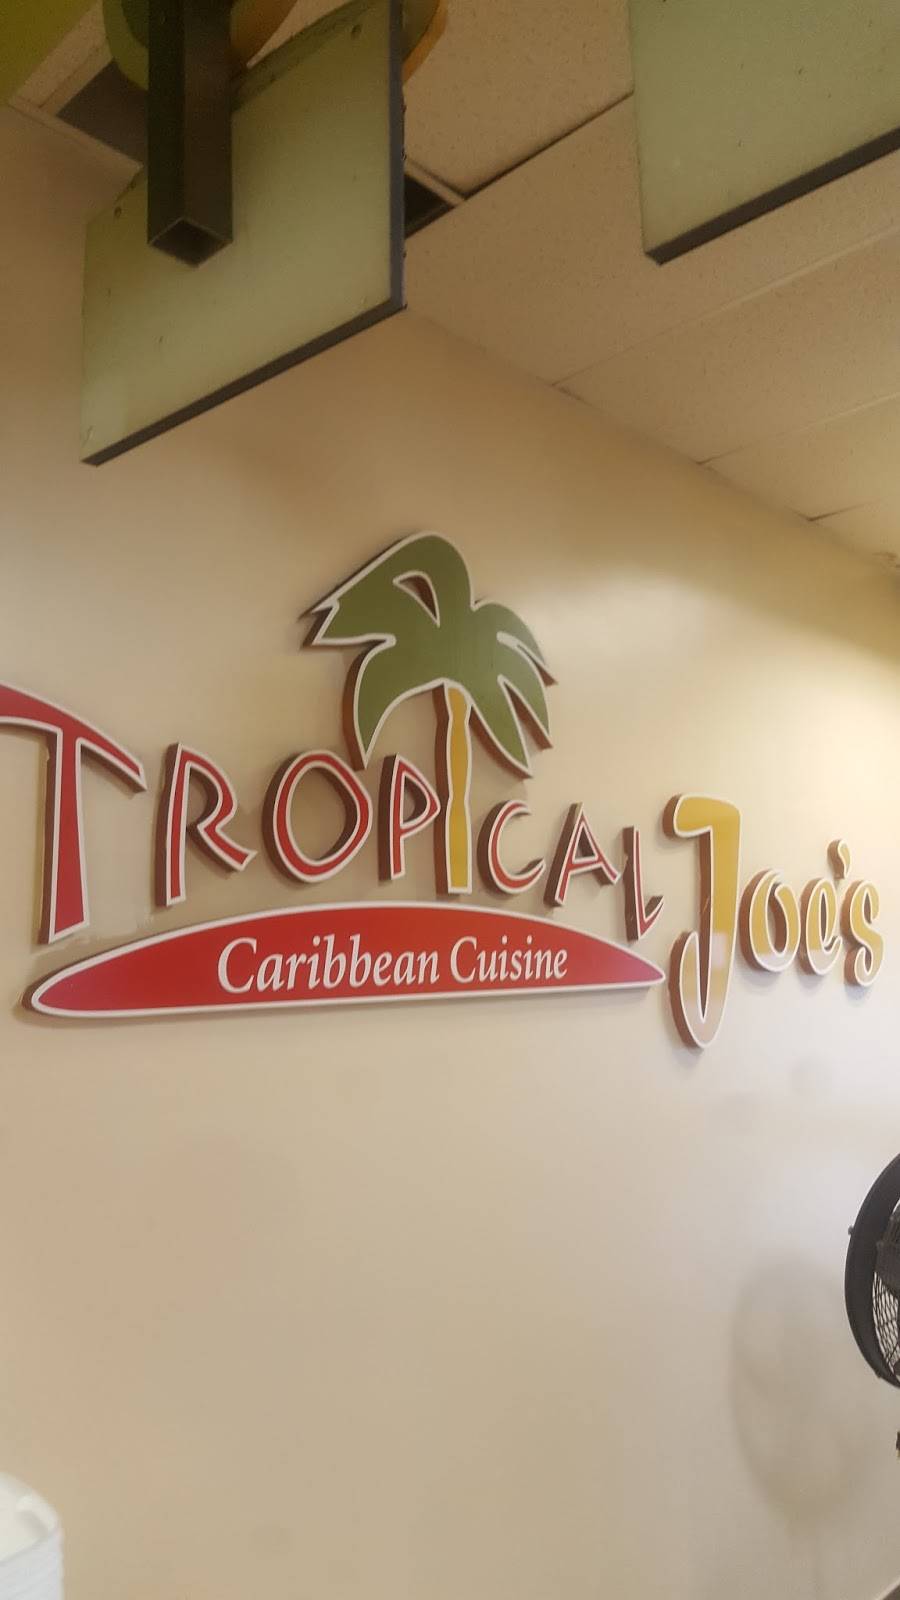 Tropical Joes | restaurant | 1530 1530 Albion Rd, Etobicoke, ON M9V 1B4, Canada | 4167478579 OR +1 416-747-8579